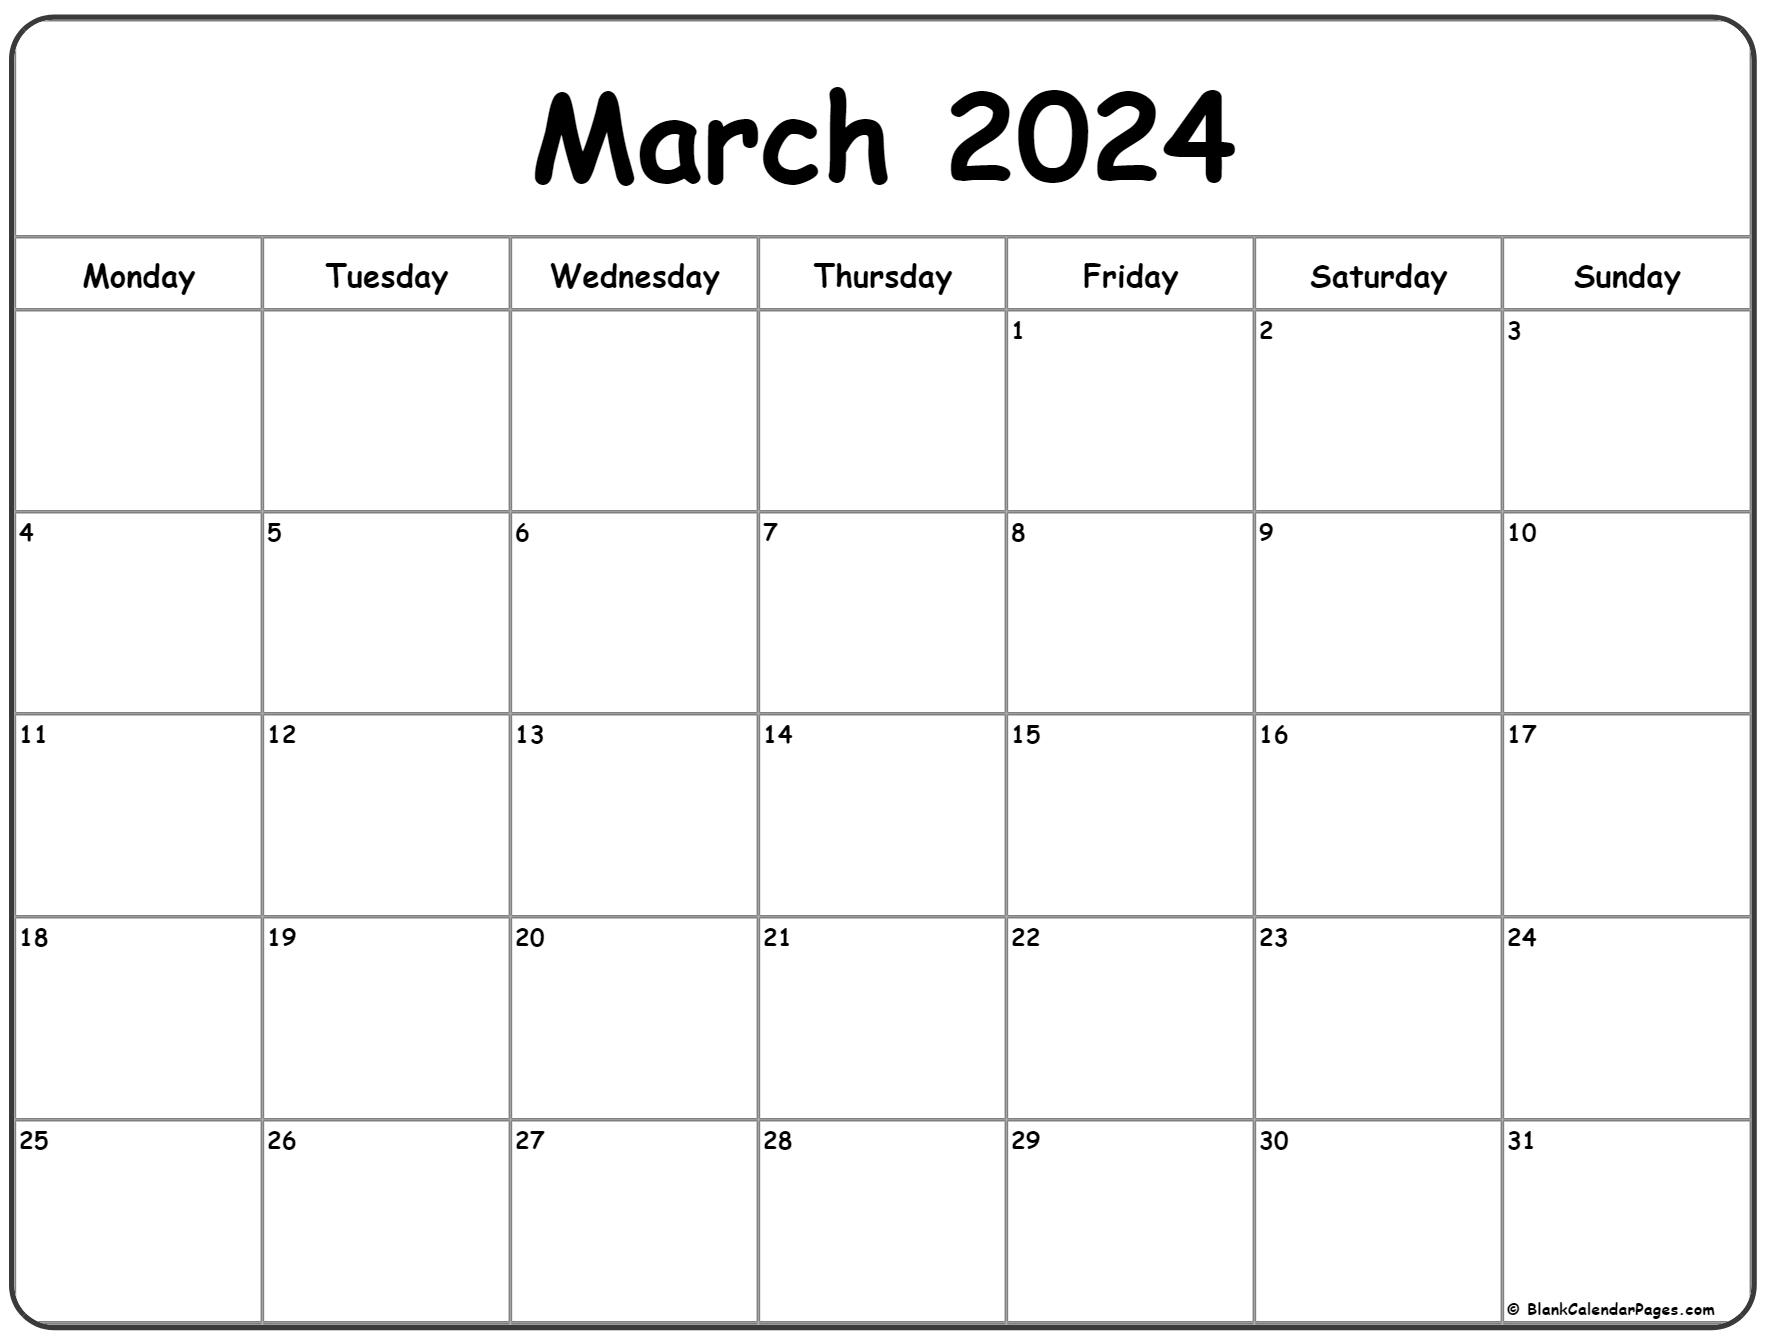 March 2024 Monday Calendar | Monday To Sunday for March 2024 Calendar Printable